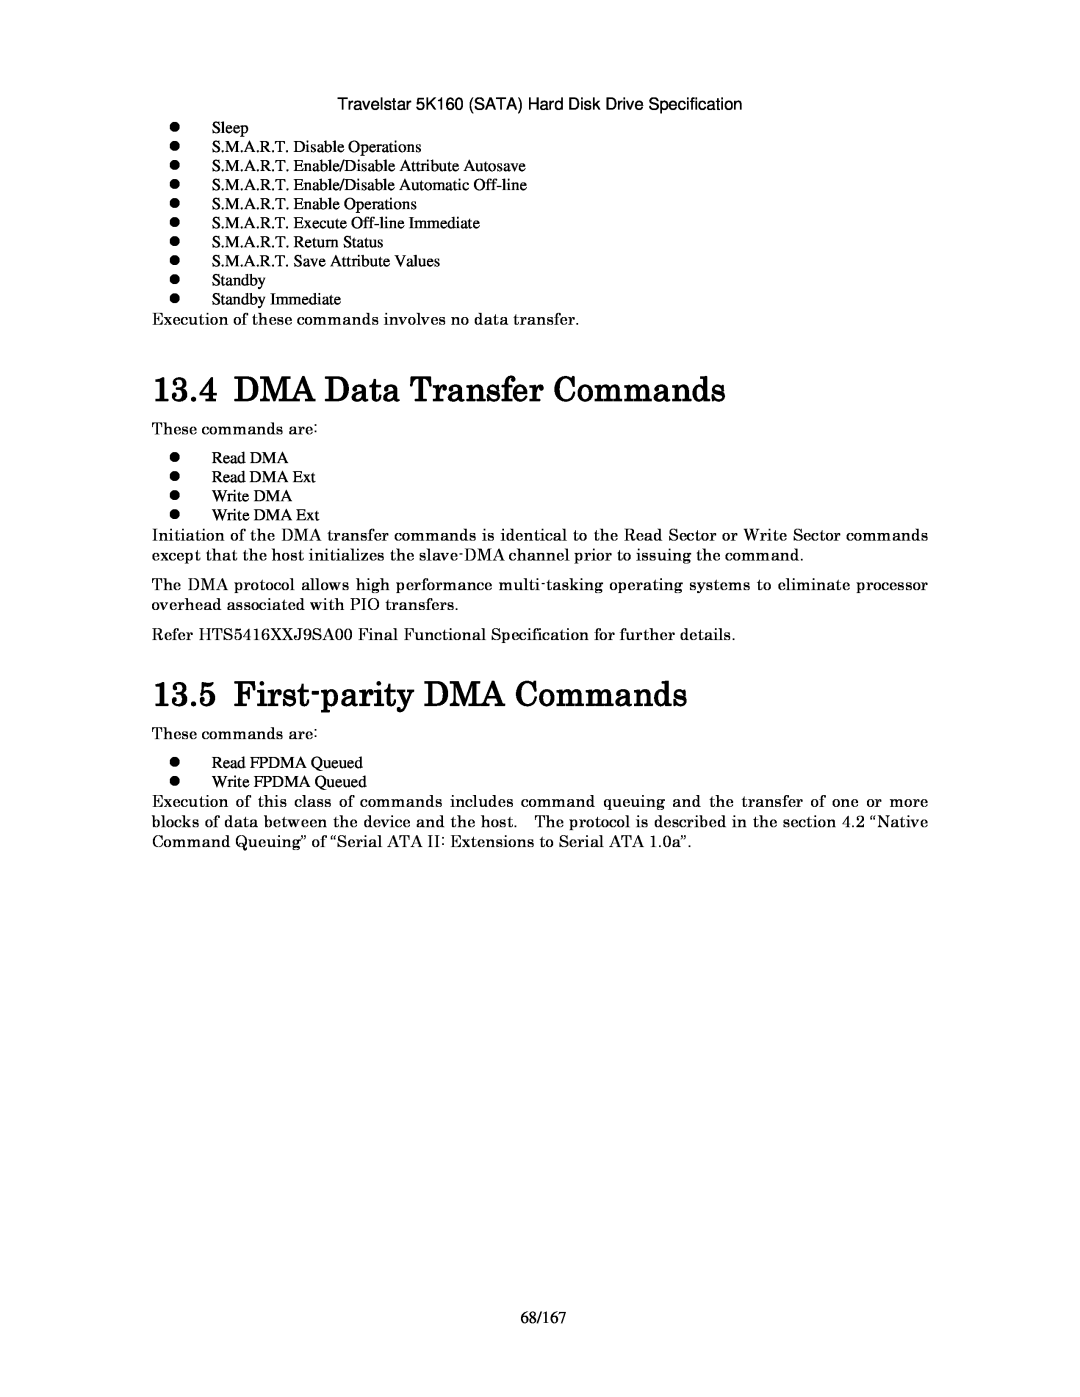 Hitachi HTS541660J9SA00, HTS541640J9SA00, HTS541680J9SA00 manual DMA Data Transfer Commands, First-parity DMA Commands 